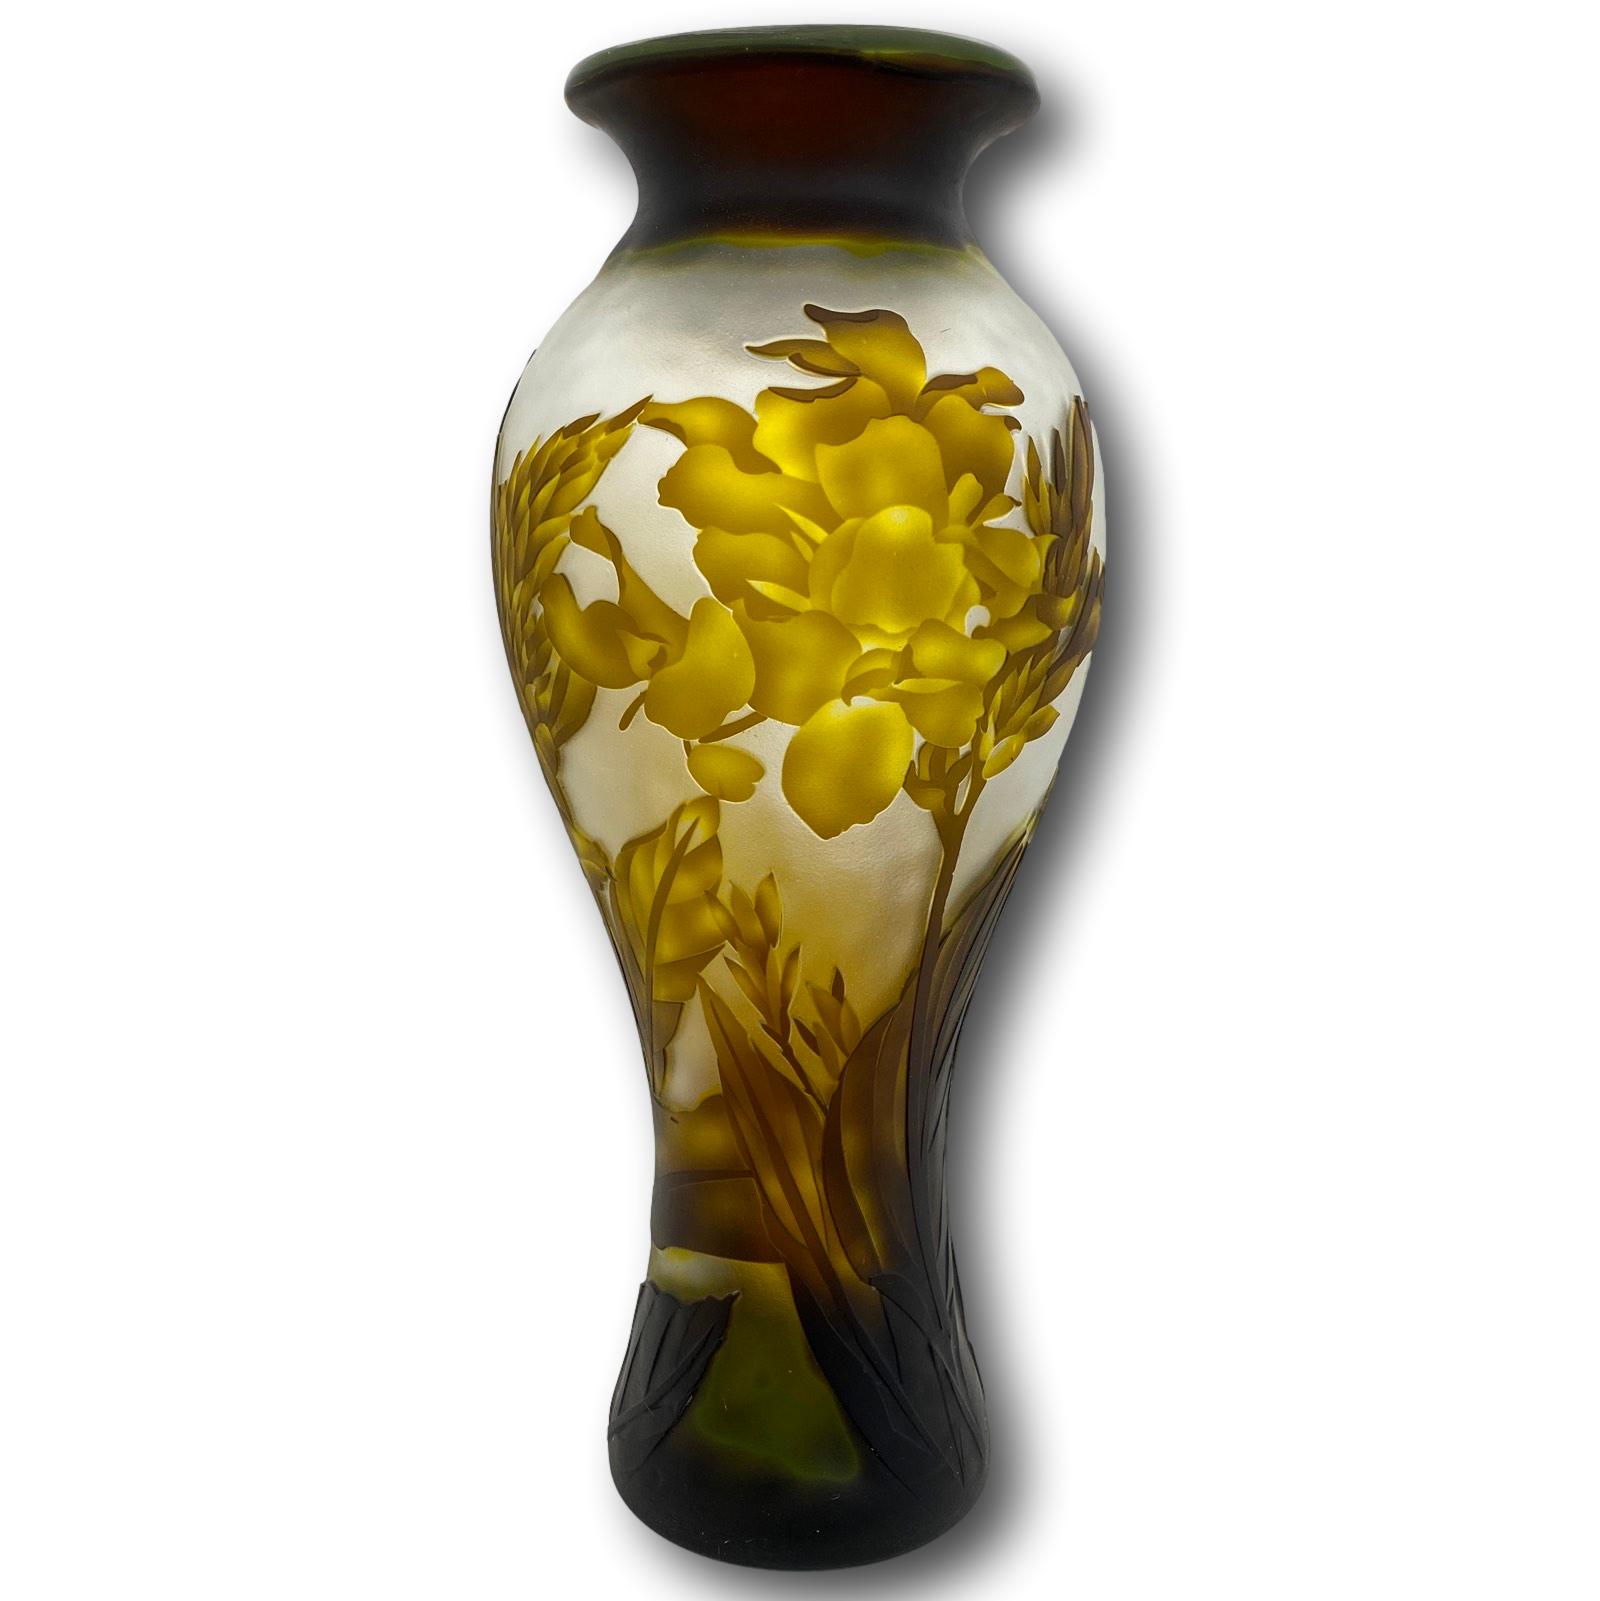 Vaasreplica naar Galle Gallé glazen vaas glas antieke art nouveau-stijl kopie c8